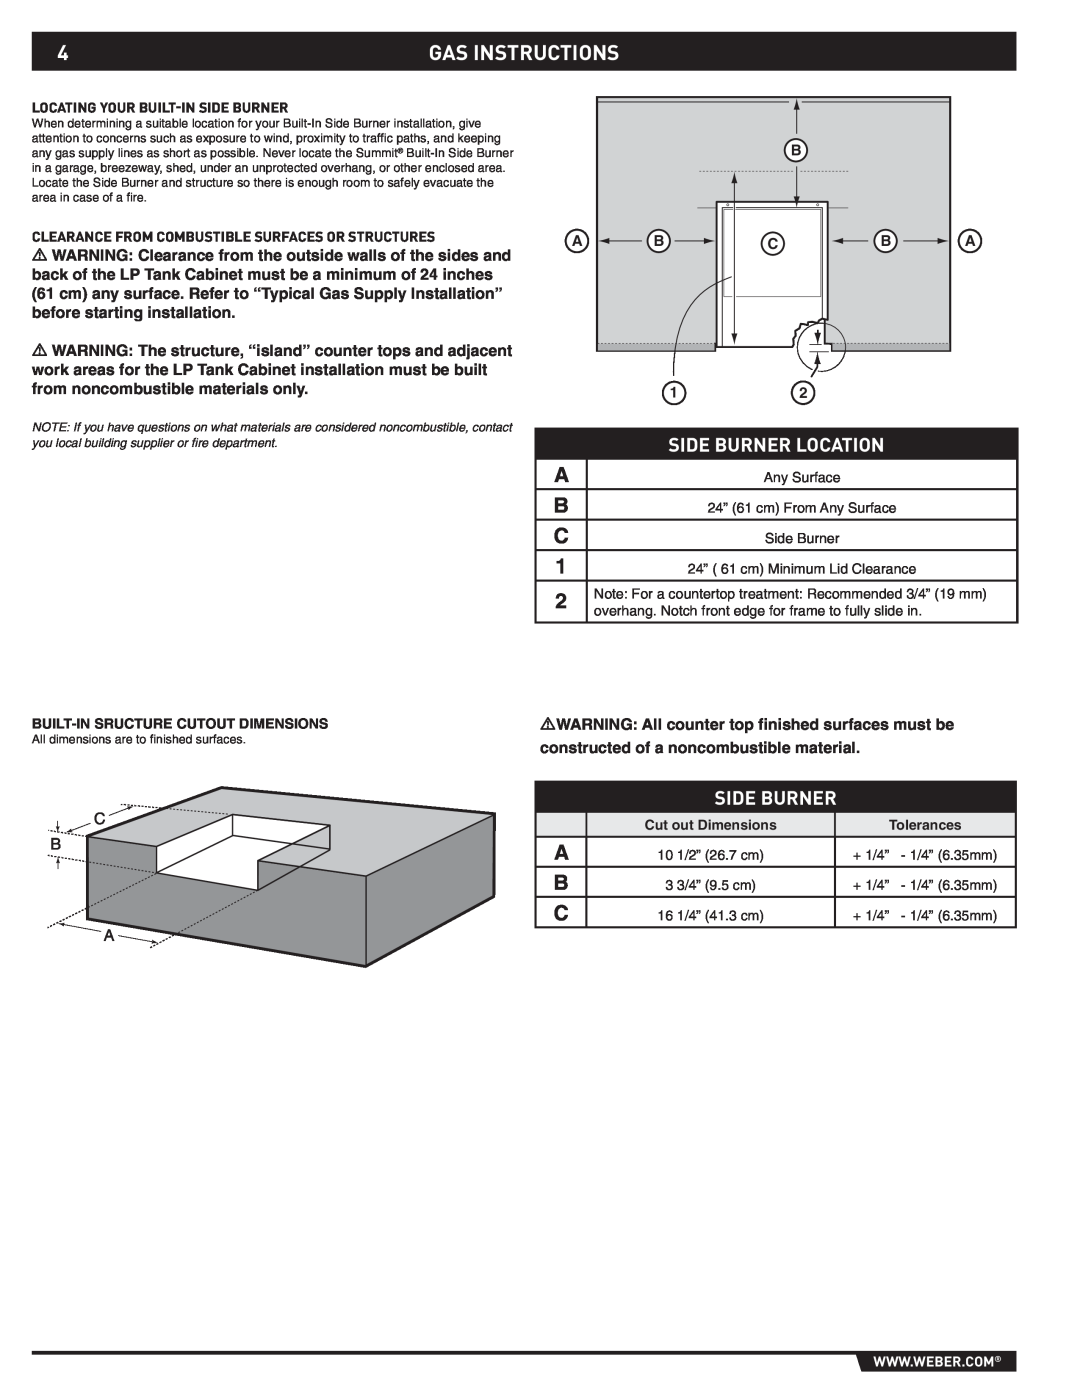 Summit 89795 manual Gas Instructions, Side Burner Location, A B, B C, 24” 61 cm Minimum Lid Clearance, Cut out Dimensions 